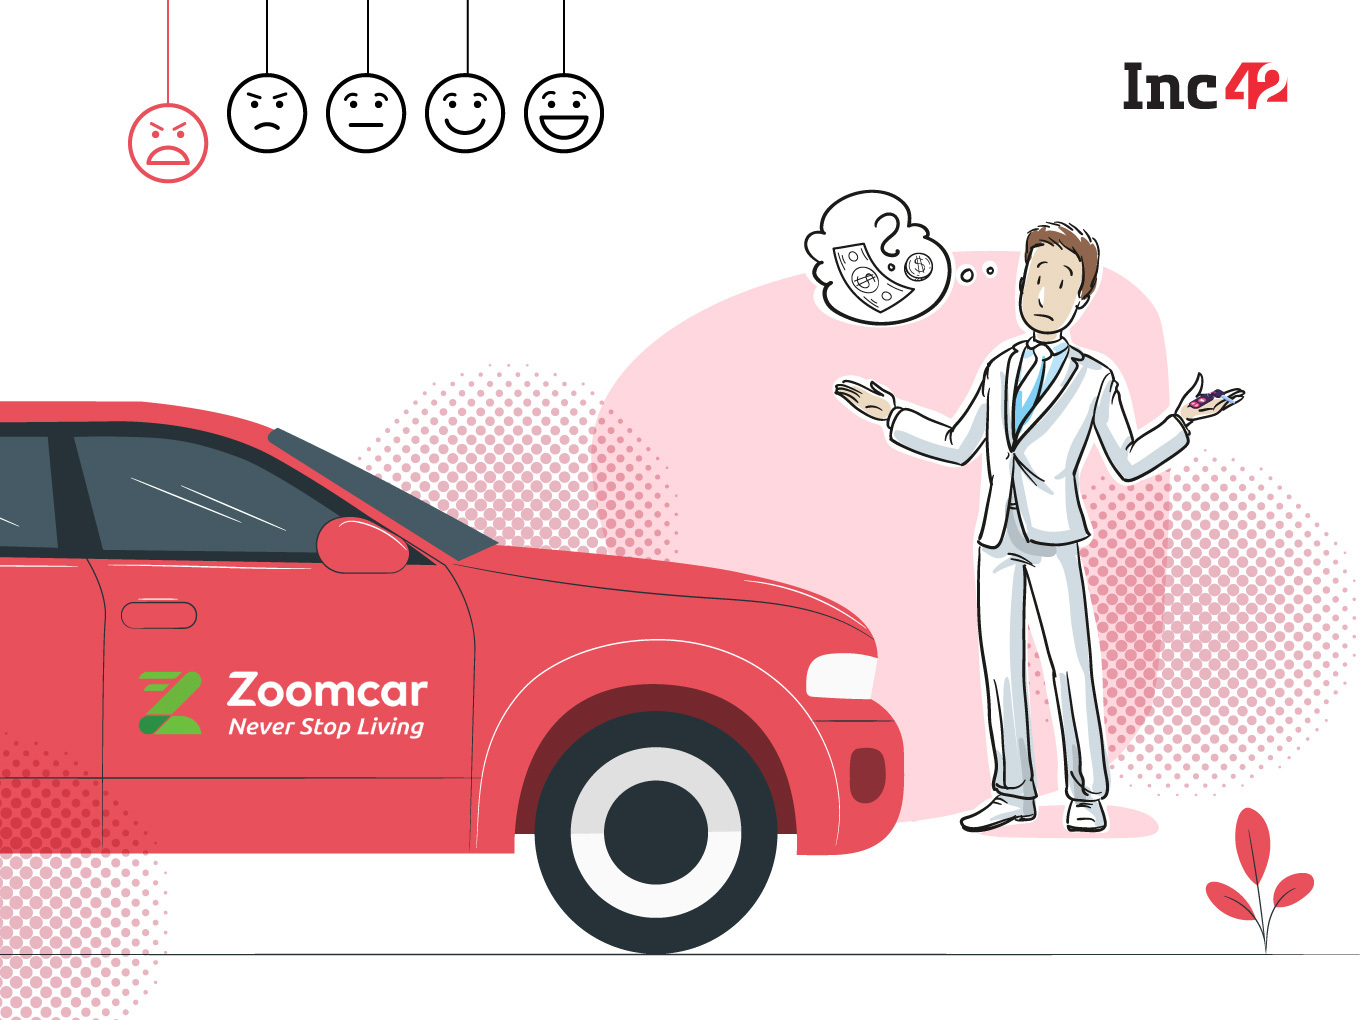 Customer Money Stuck In Refunds, But Zoomcar CEO 'Unaware'